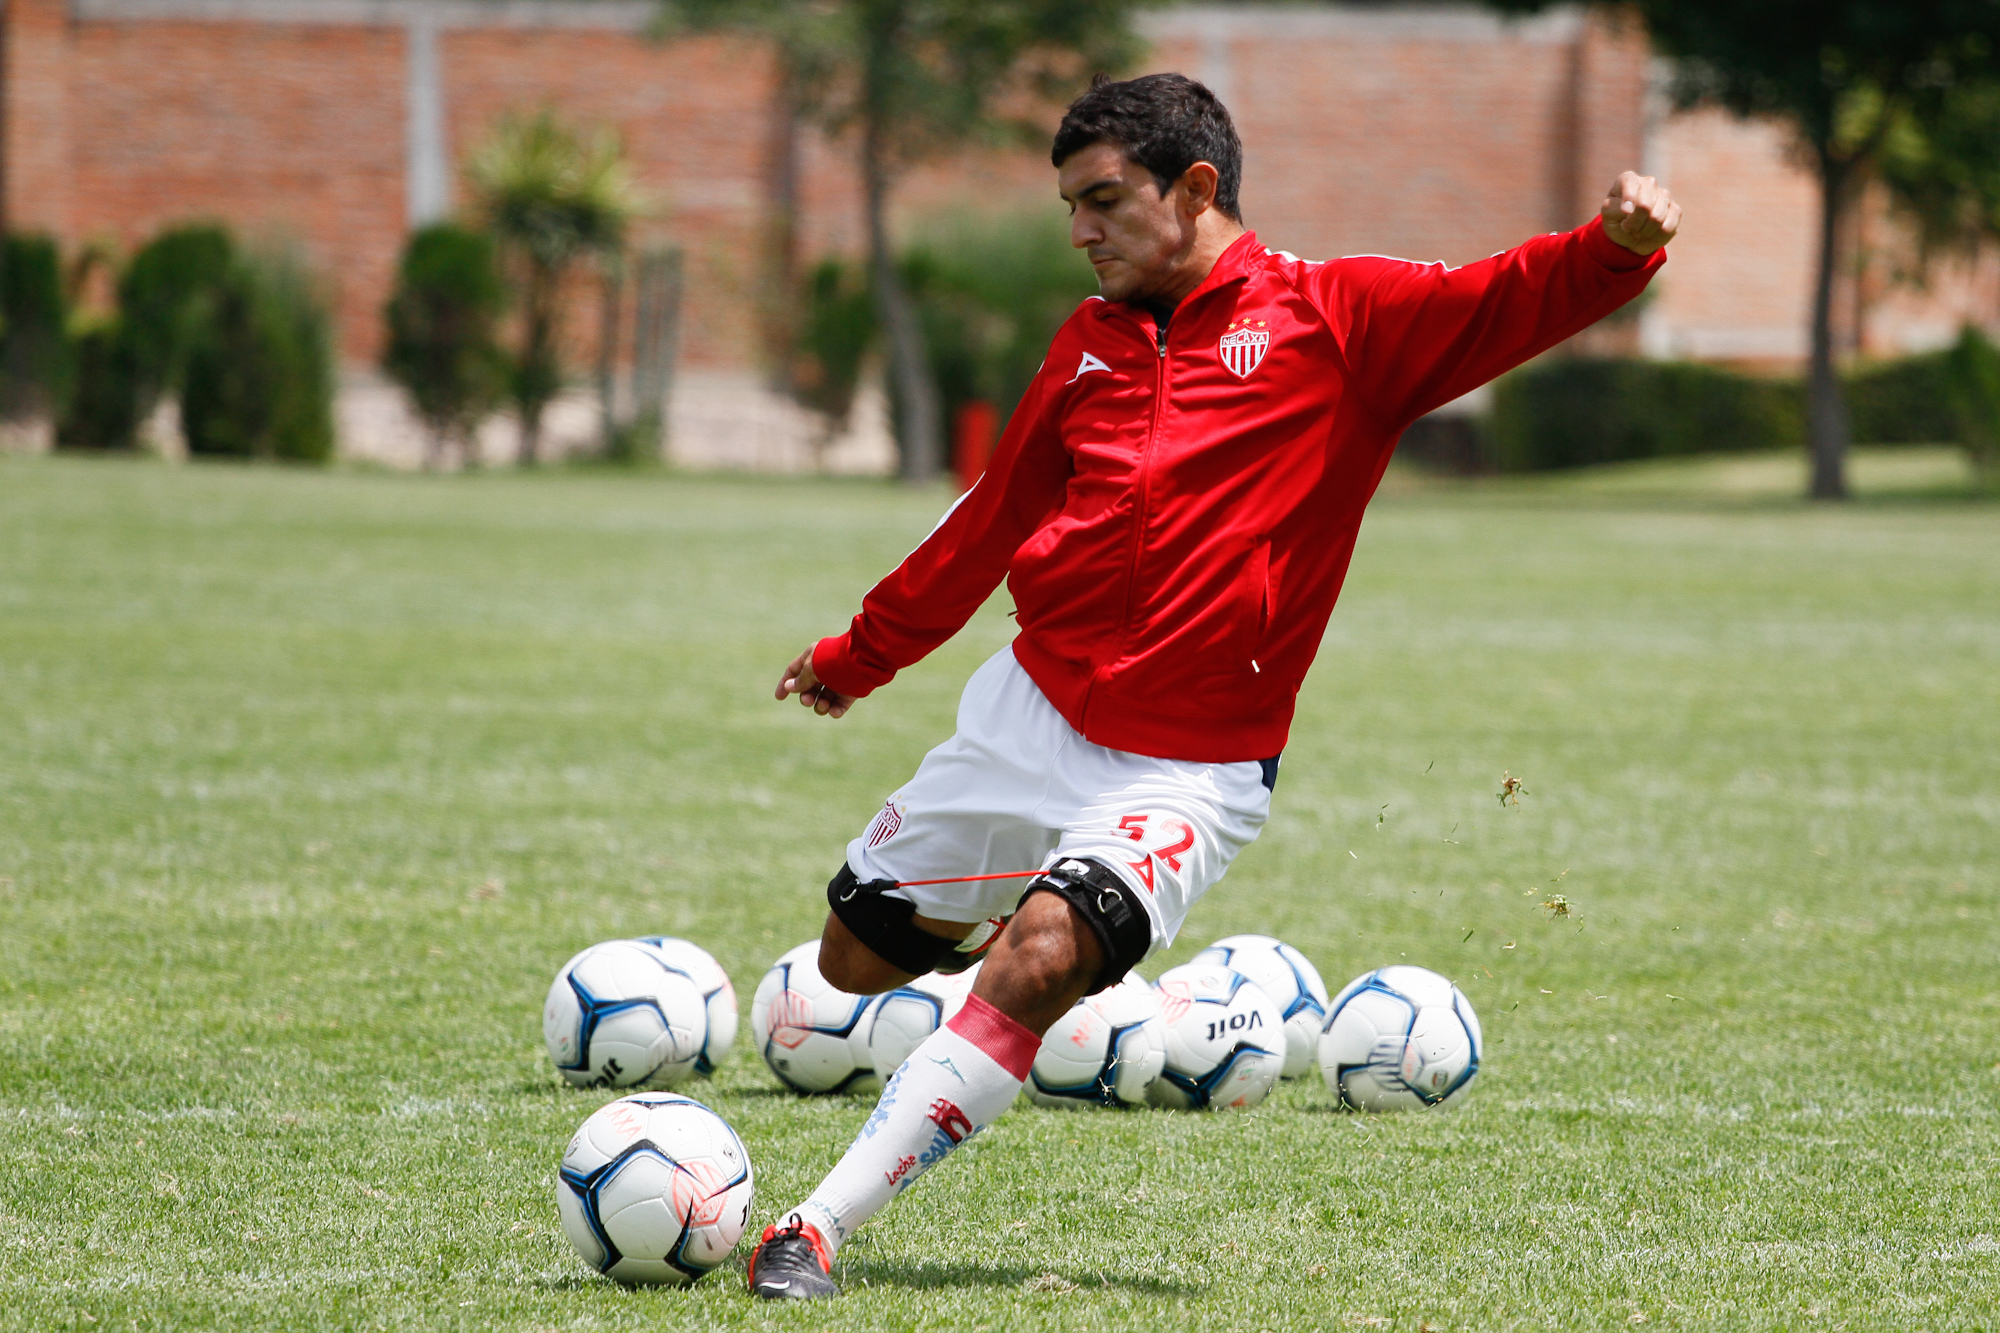 Kicking | Soccers Kicks | Powerful Soccer Kicks